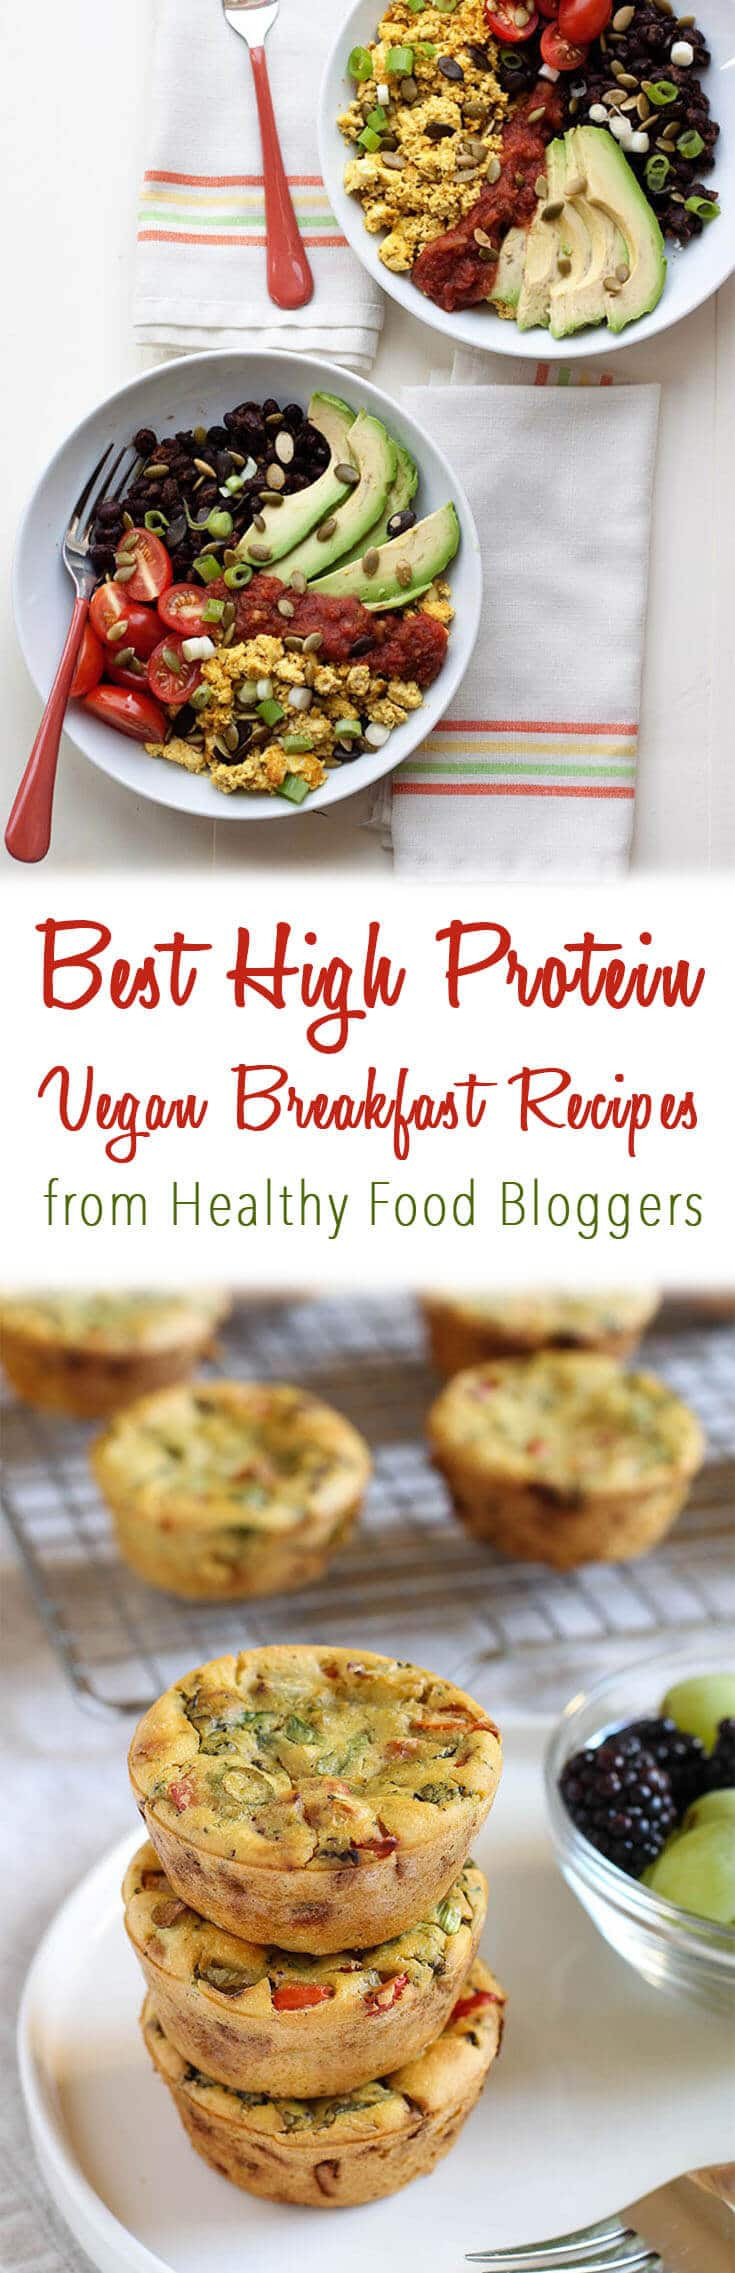 Vegan Breakfast Recipes
 Best High Protein Vegan Breakfast Recipes from Healthy